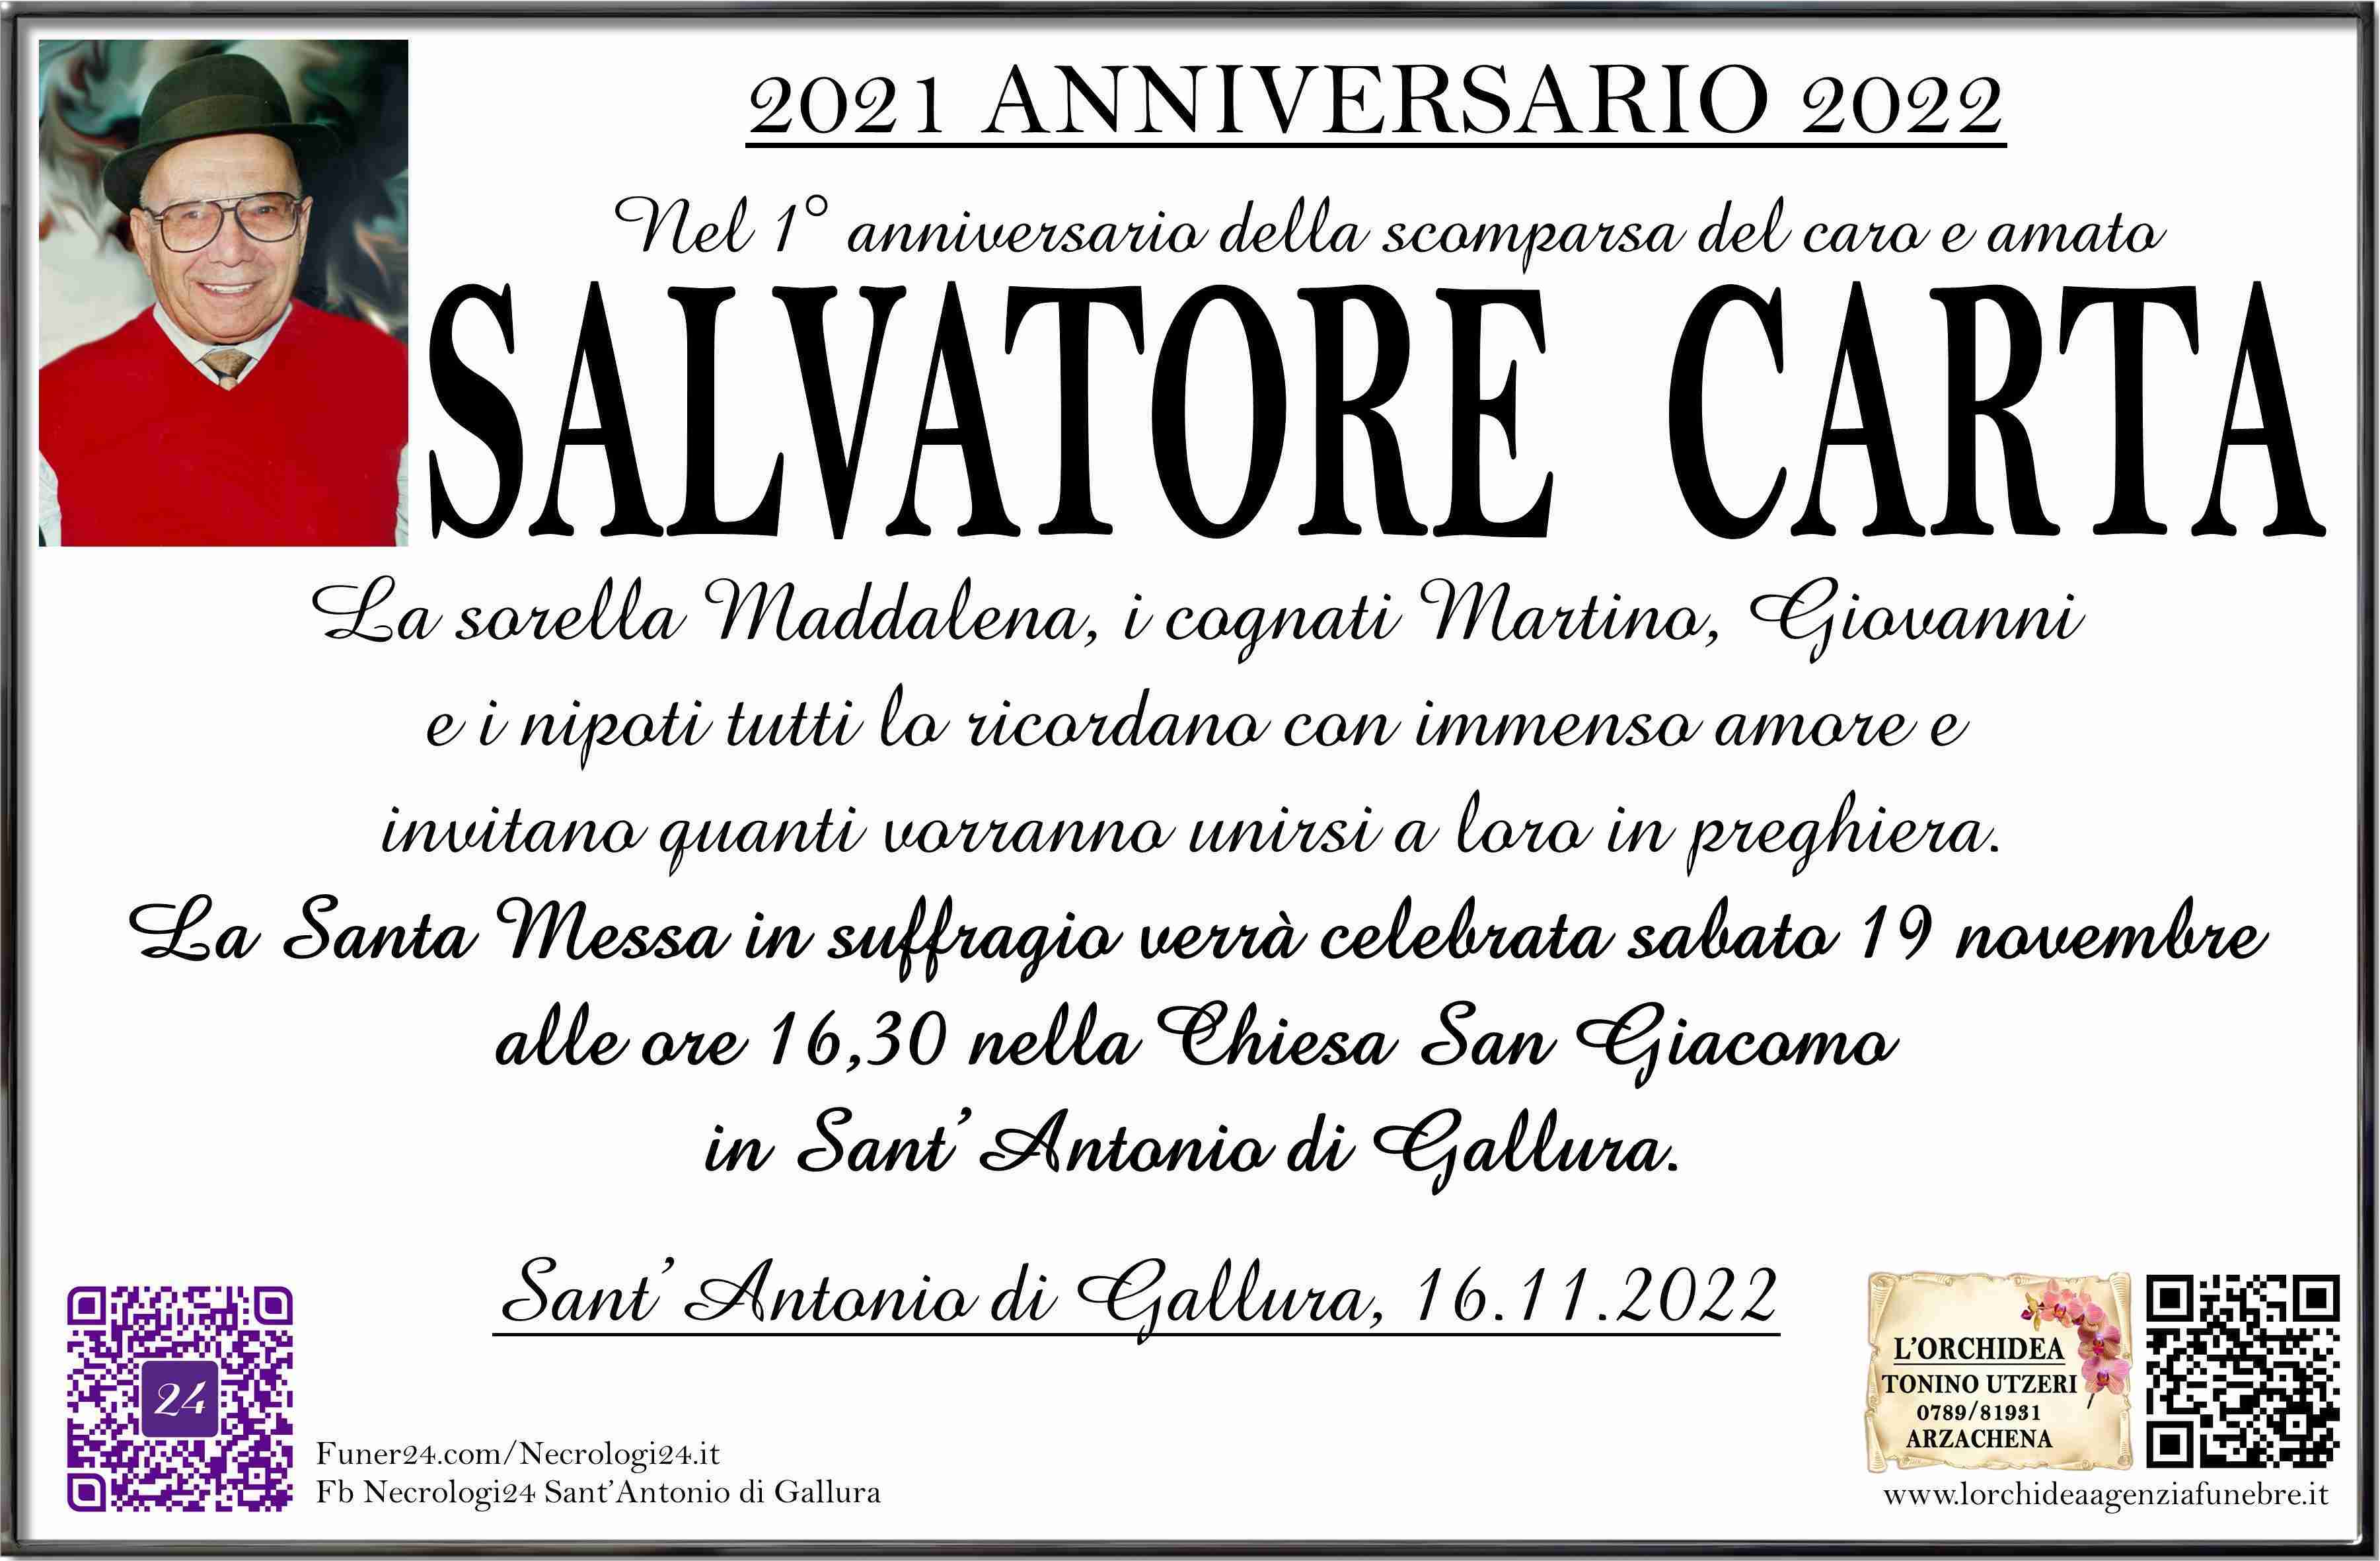 Salvatore Carta